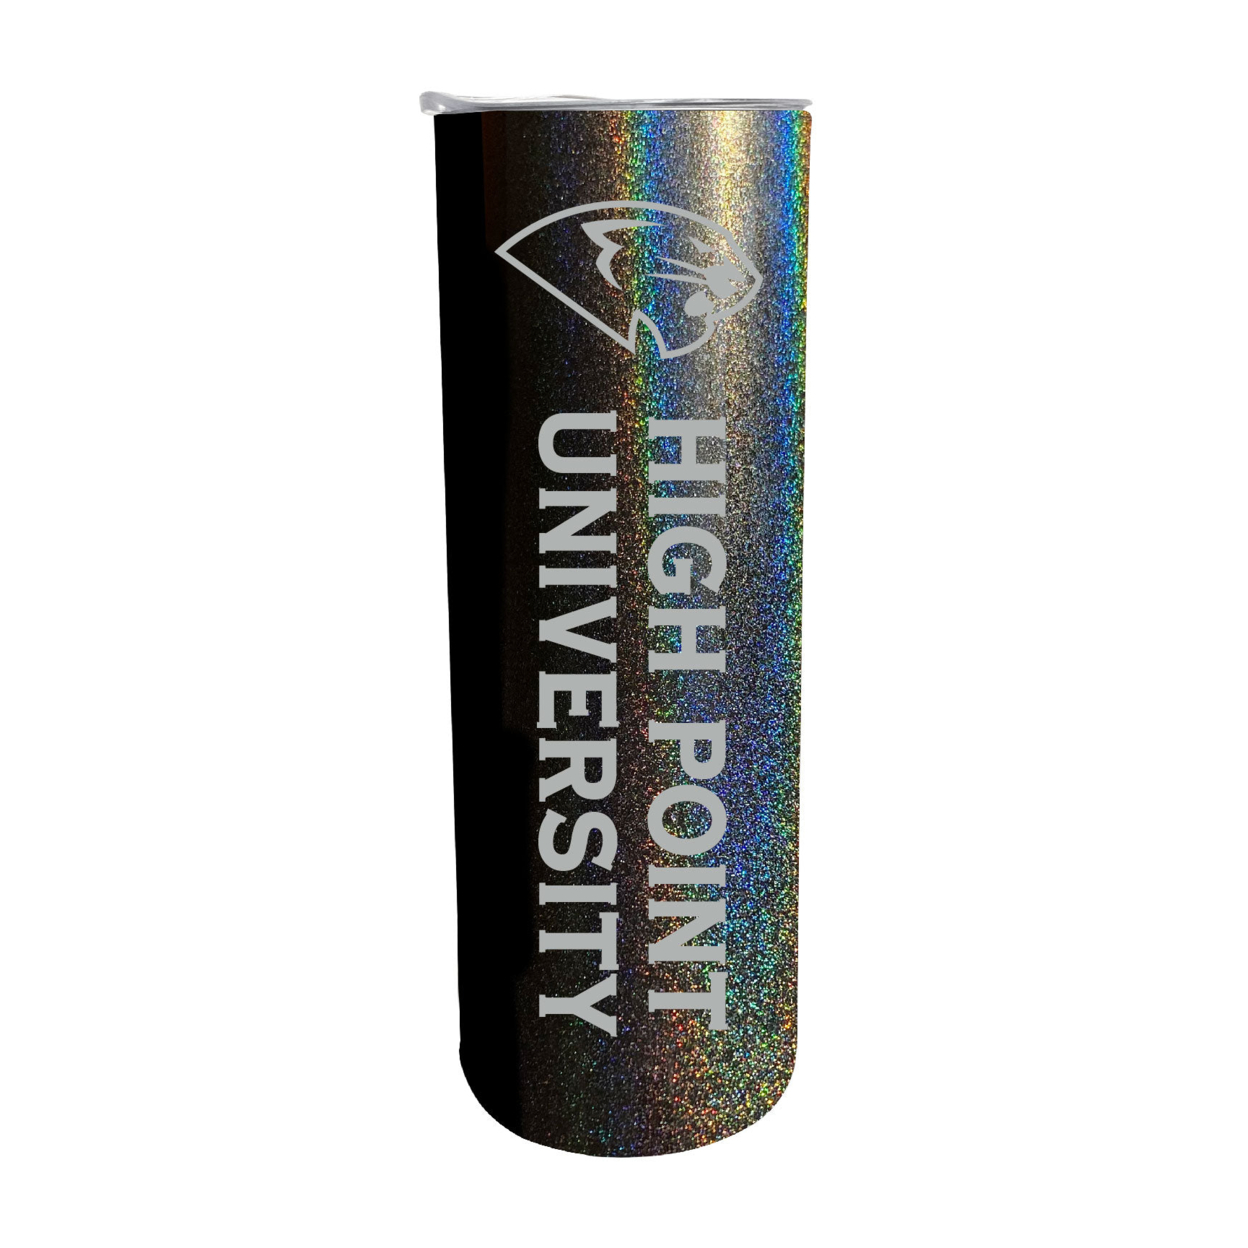 High Point University 20oz Insulated Stainless Steel Skinny Tumbler - Rainbow Glitter Black